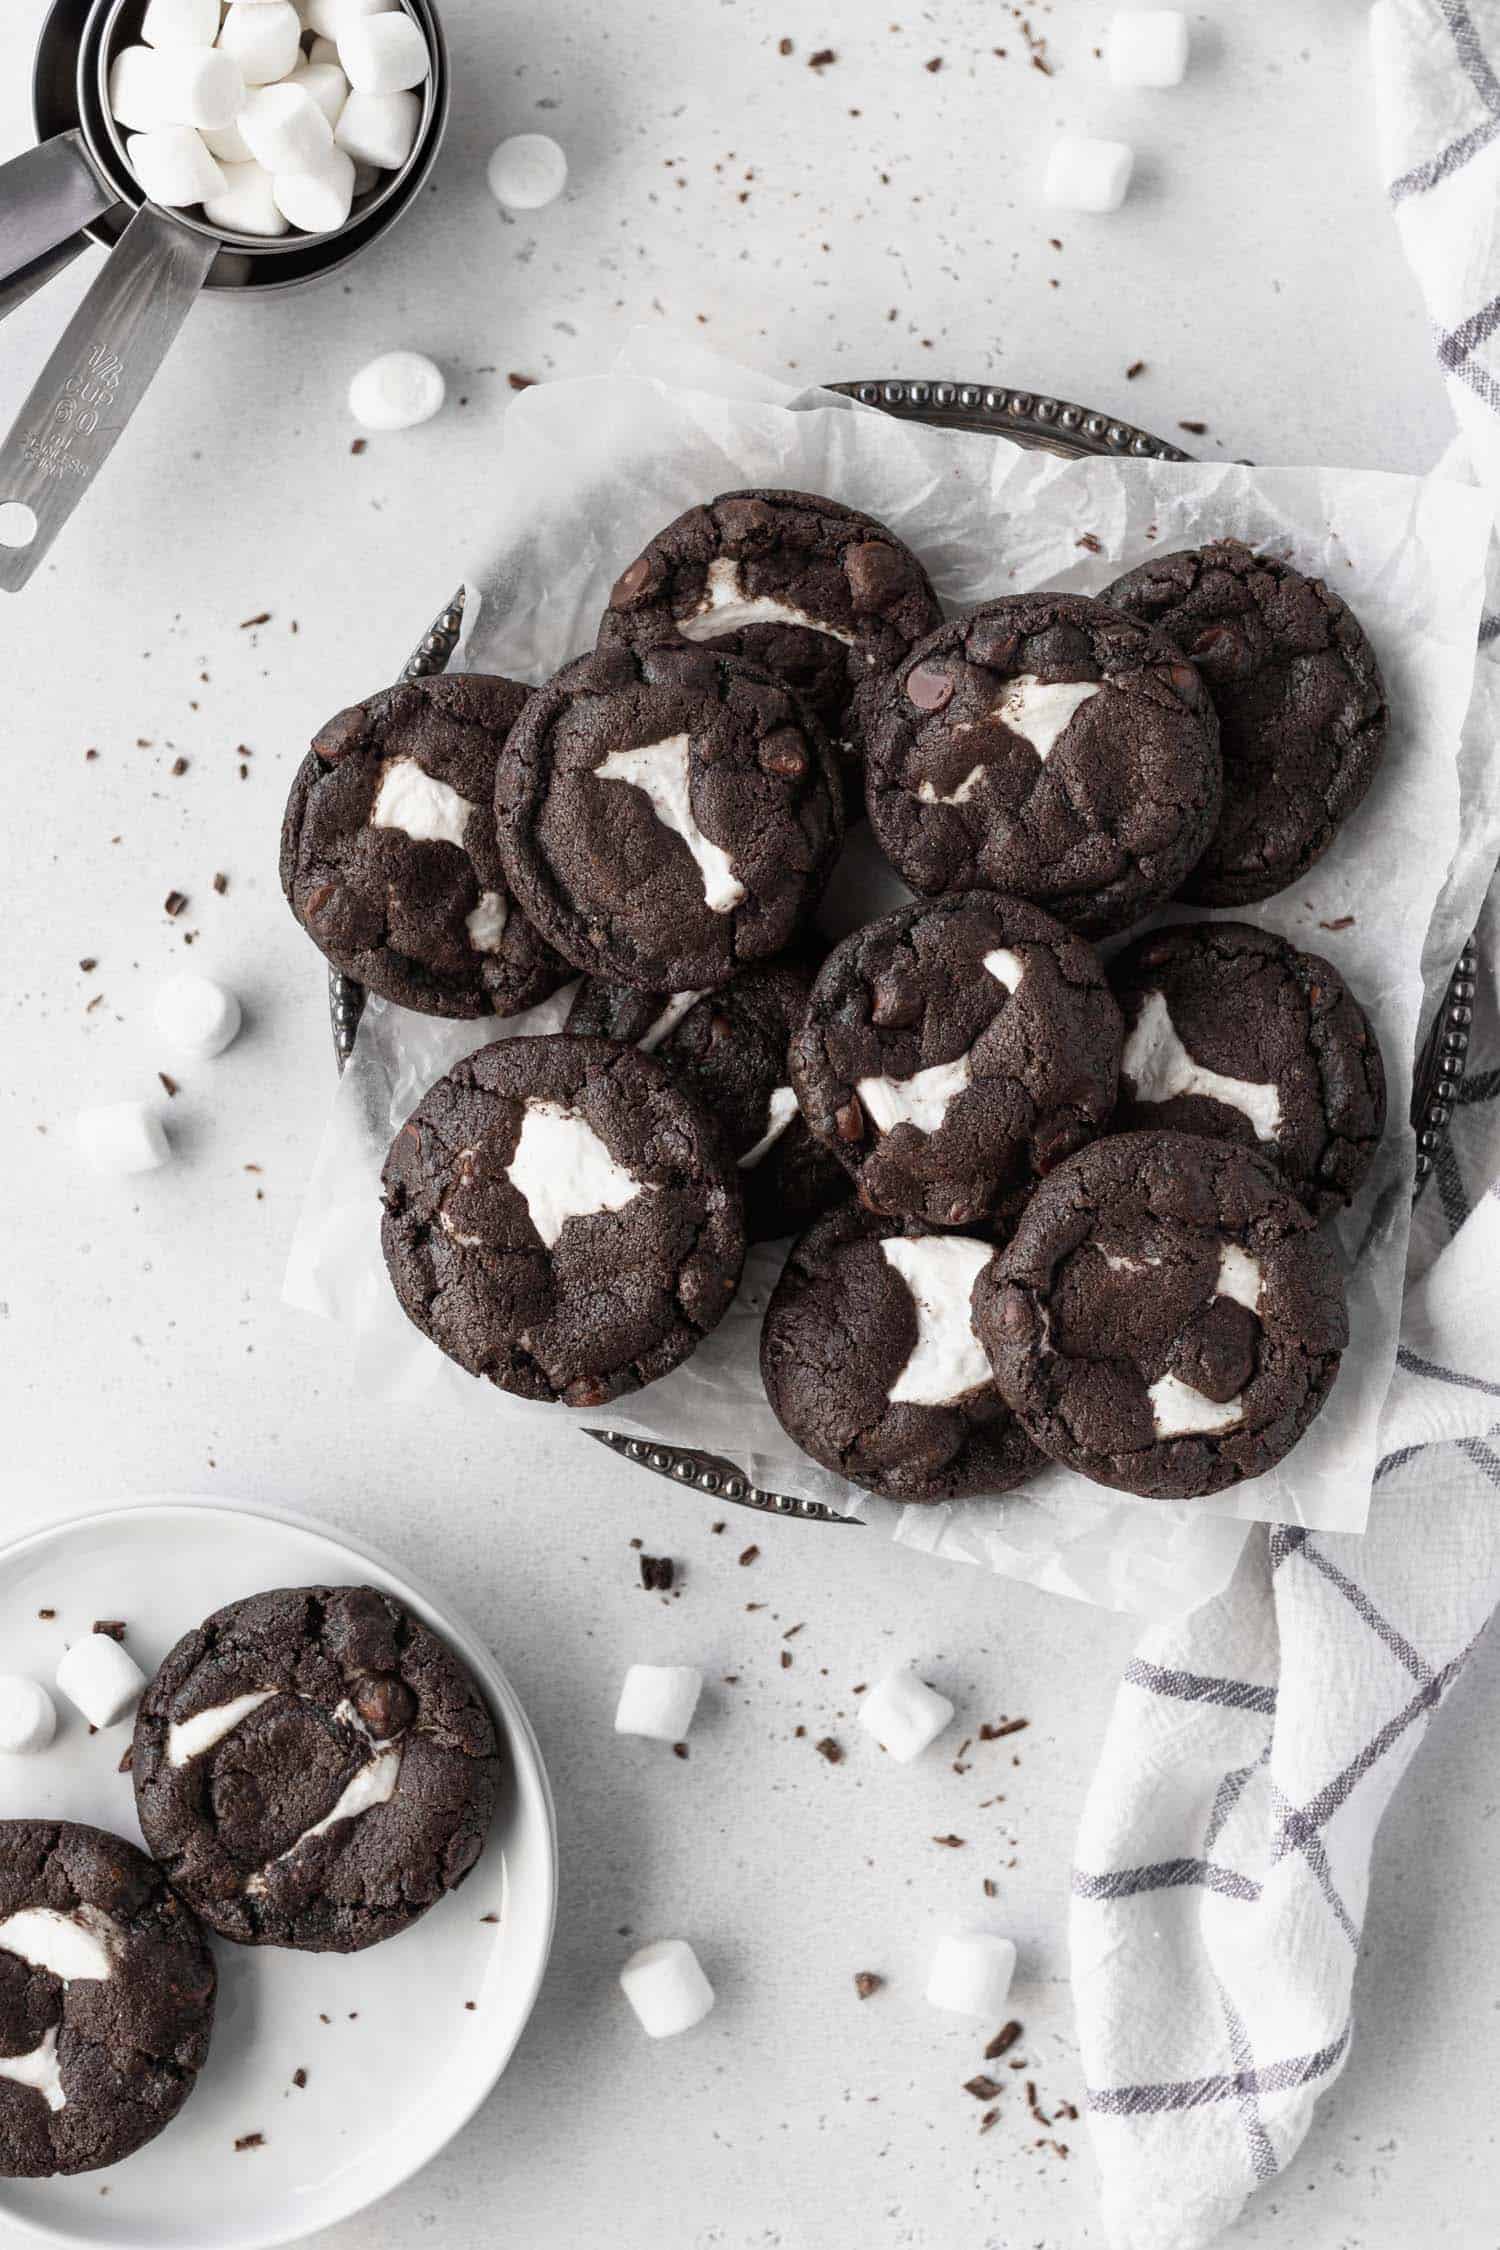 Marshmallow stuffed chocolate cookies on a platter